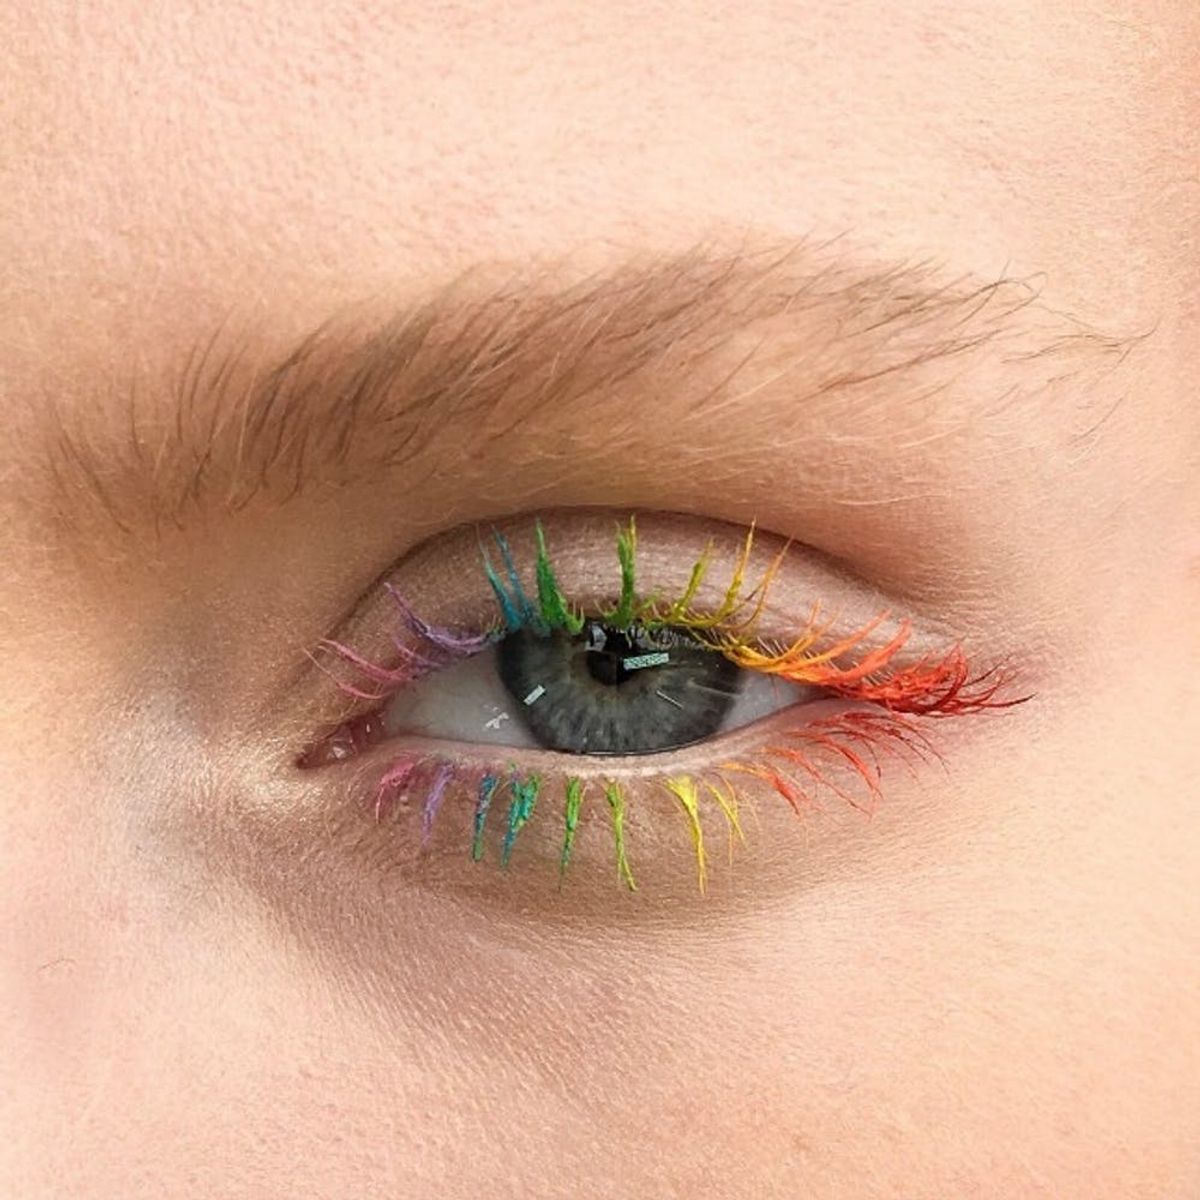 Rainbow Eyelashes Are the Next OMG Beauty Trend